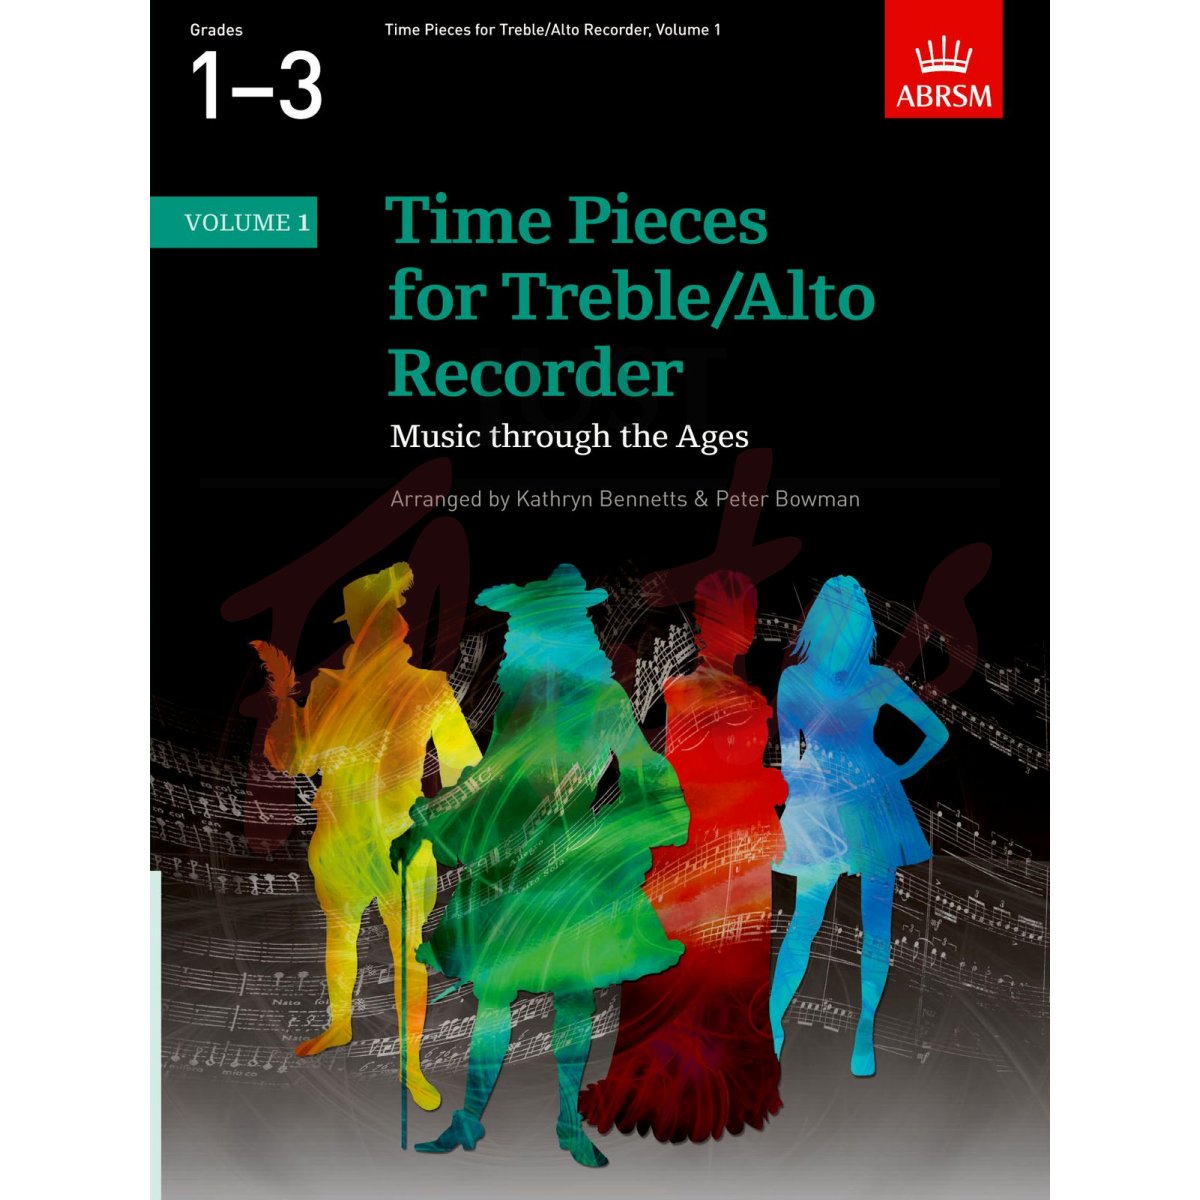 Time Pieces for Treble/Alto Recorder